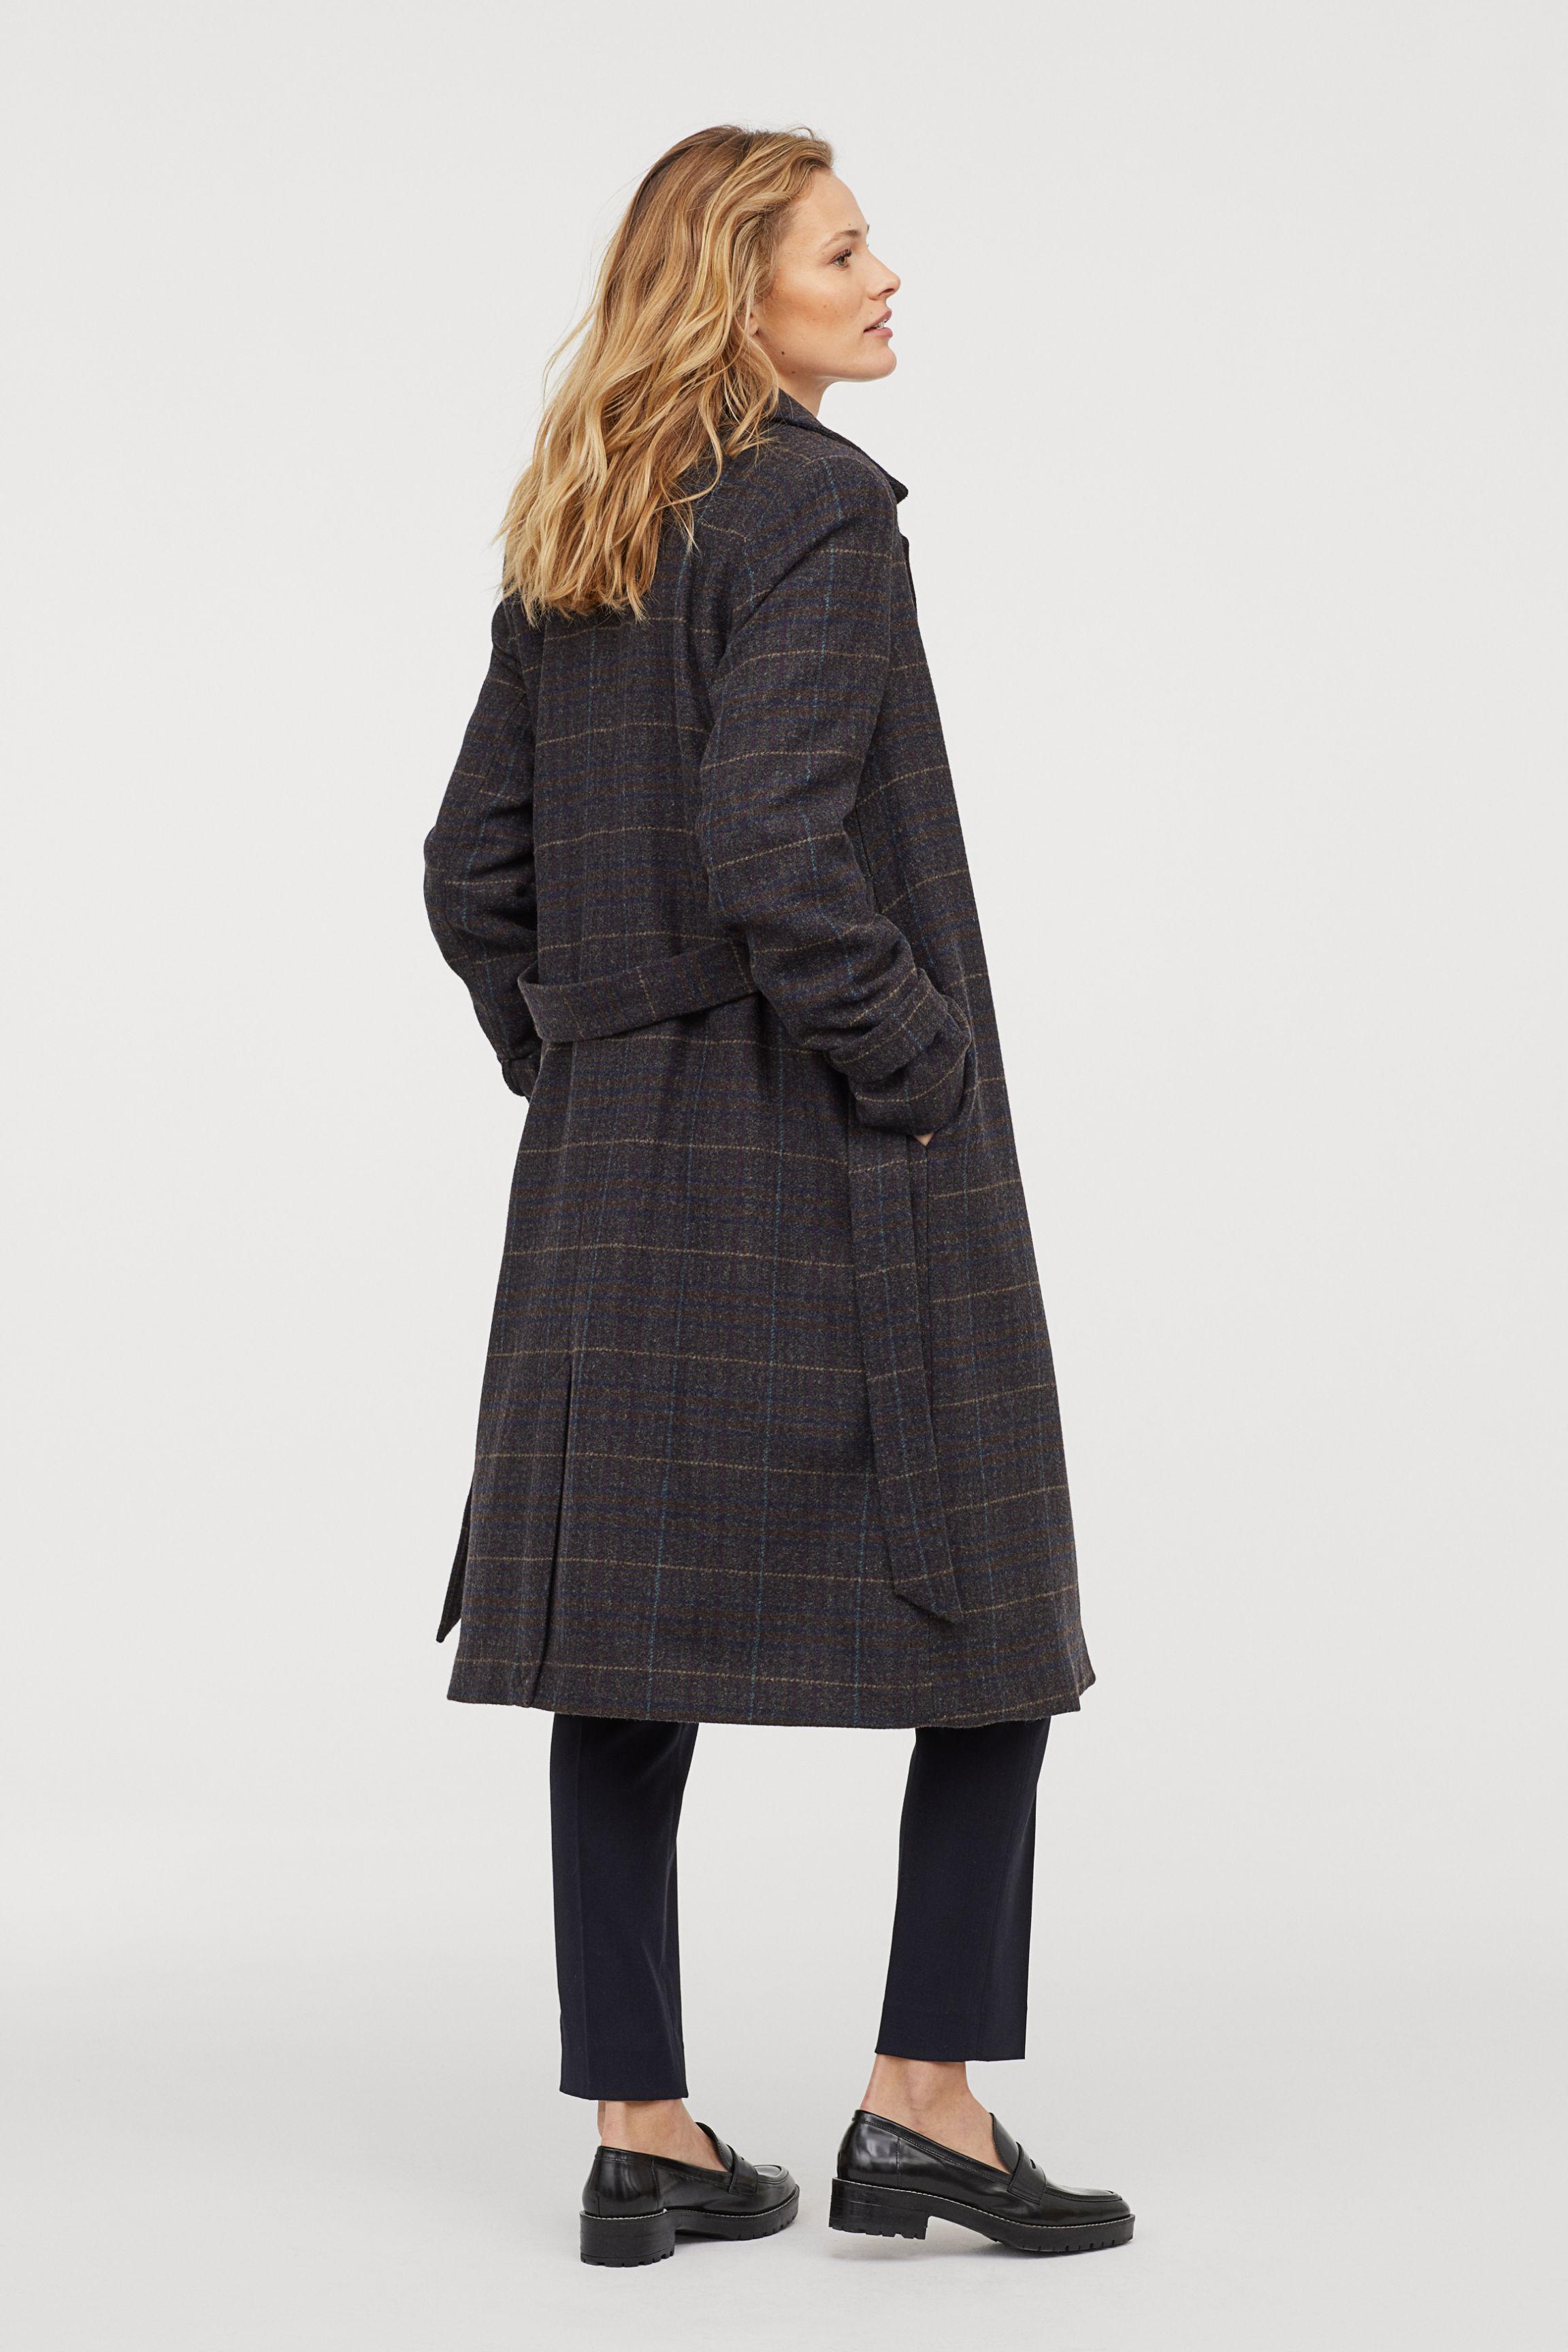 H&M Wool-blend Coat in Black - Lyst